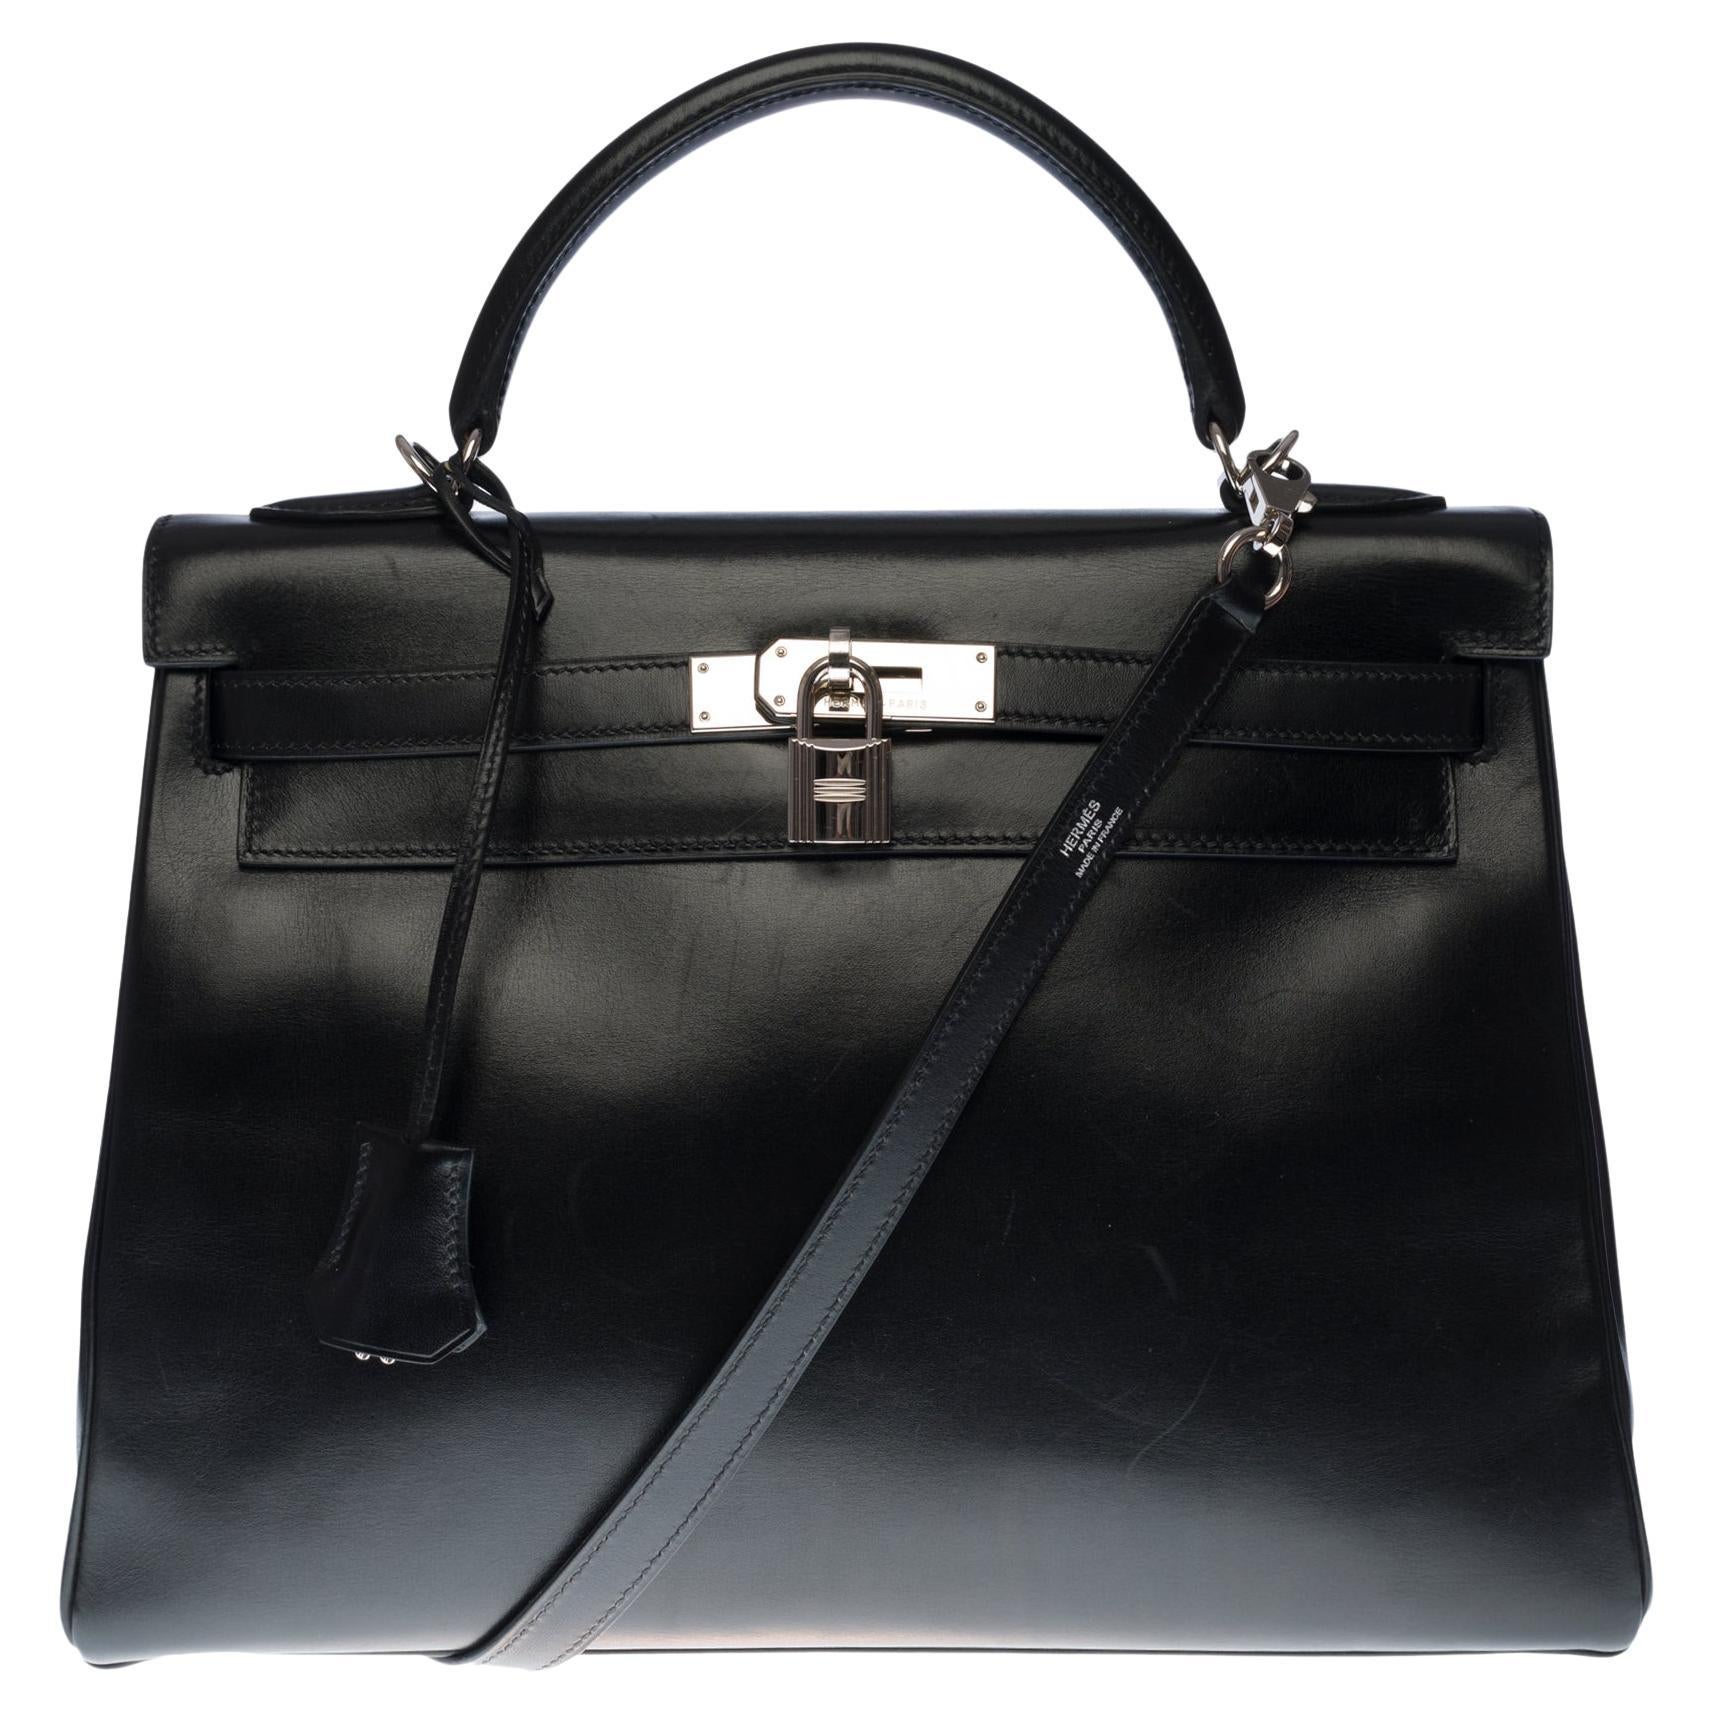 Rare Hermès Kelly 32 retourné handbag with strap in black calf leather, SHW